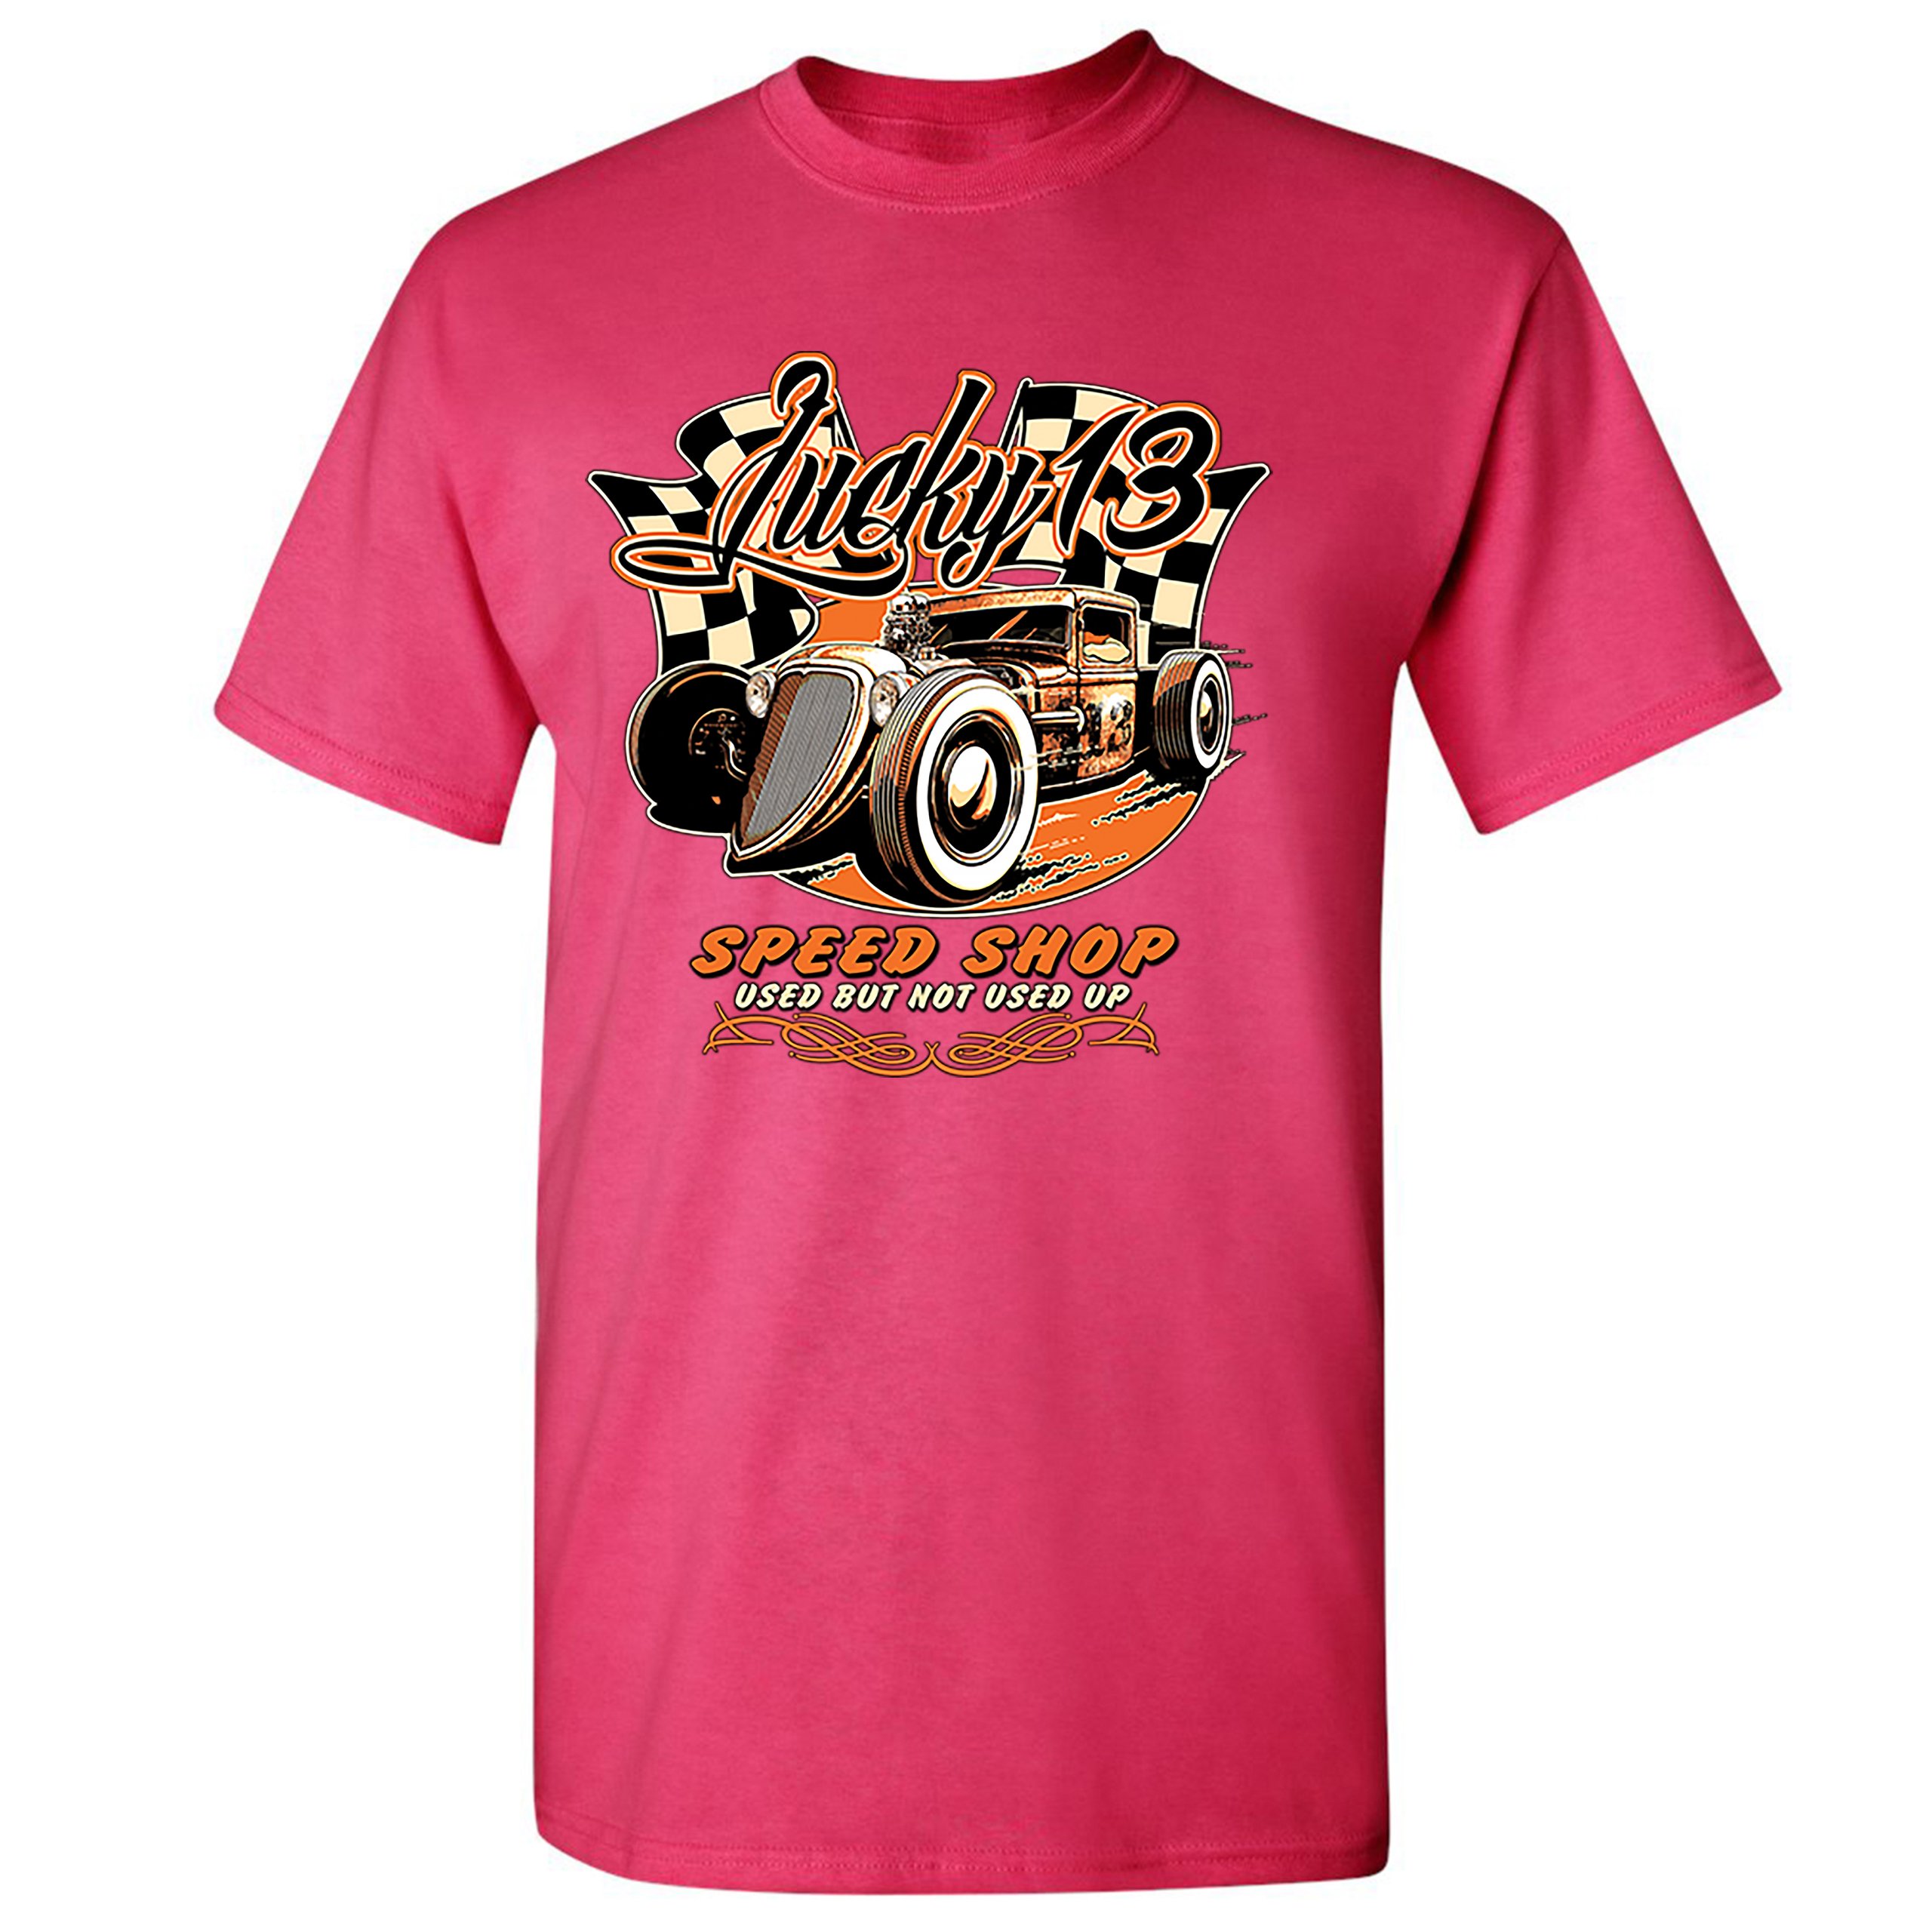 Lucky 13 Speed Shop T-shirt Rat Rod Route 66 Vintage Racing Car Men's ...